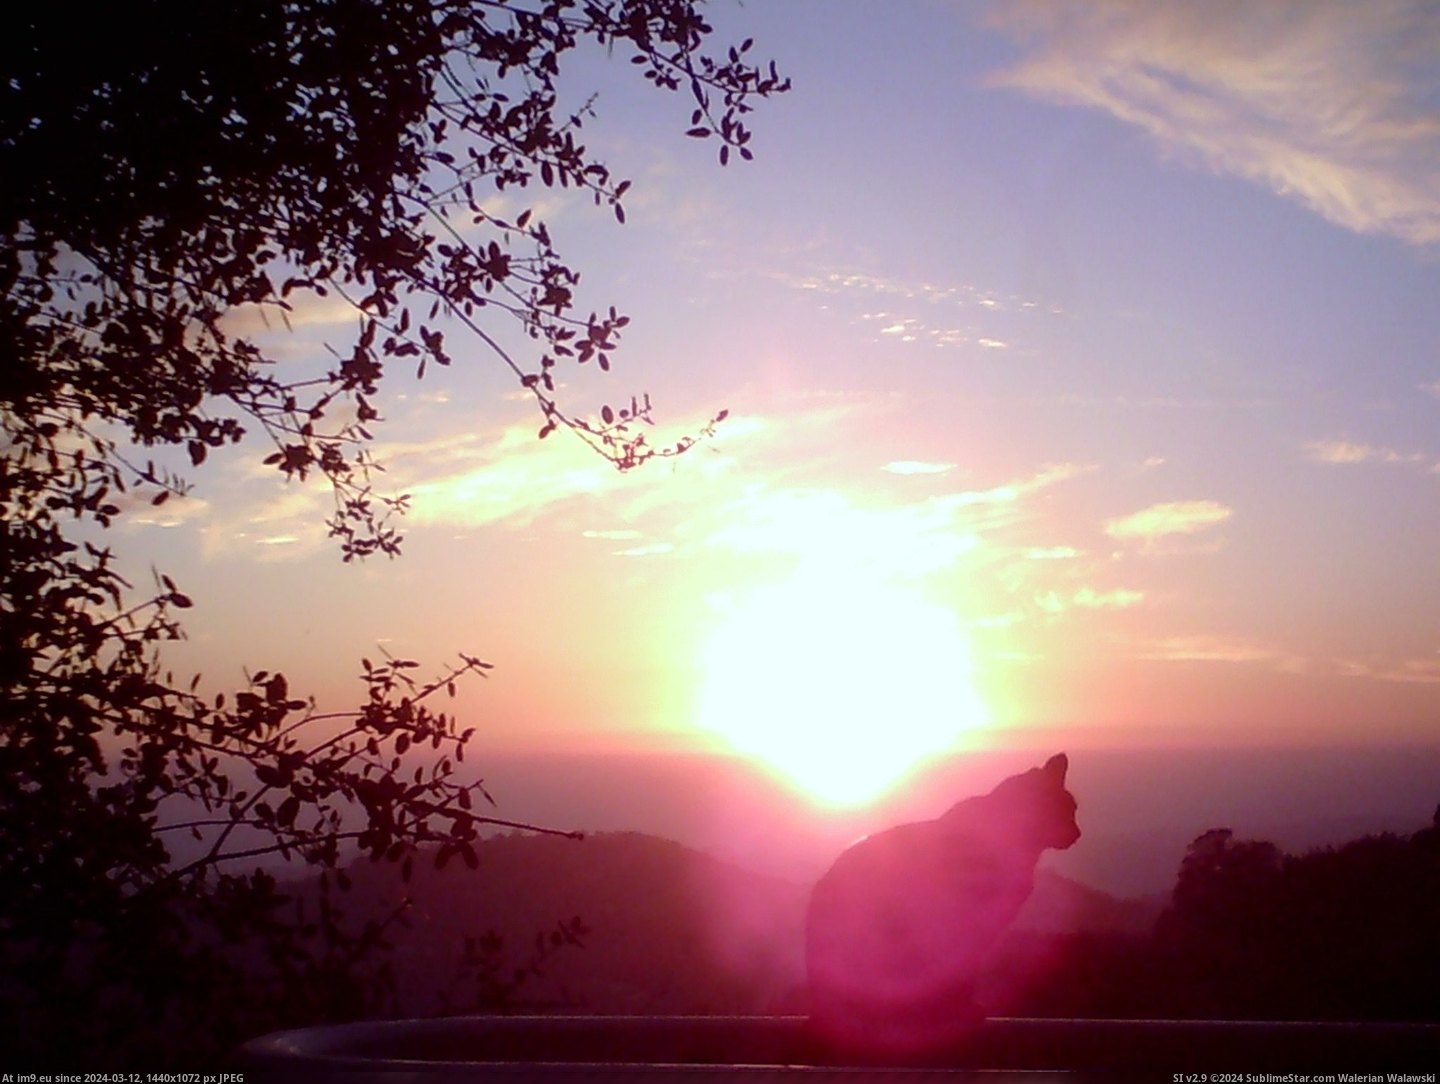 #Cats #Sunset #Cat [Cats] Sunset Cat Pic. (Изображение из альбом My r/CATS favs))